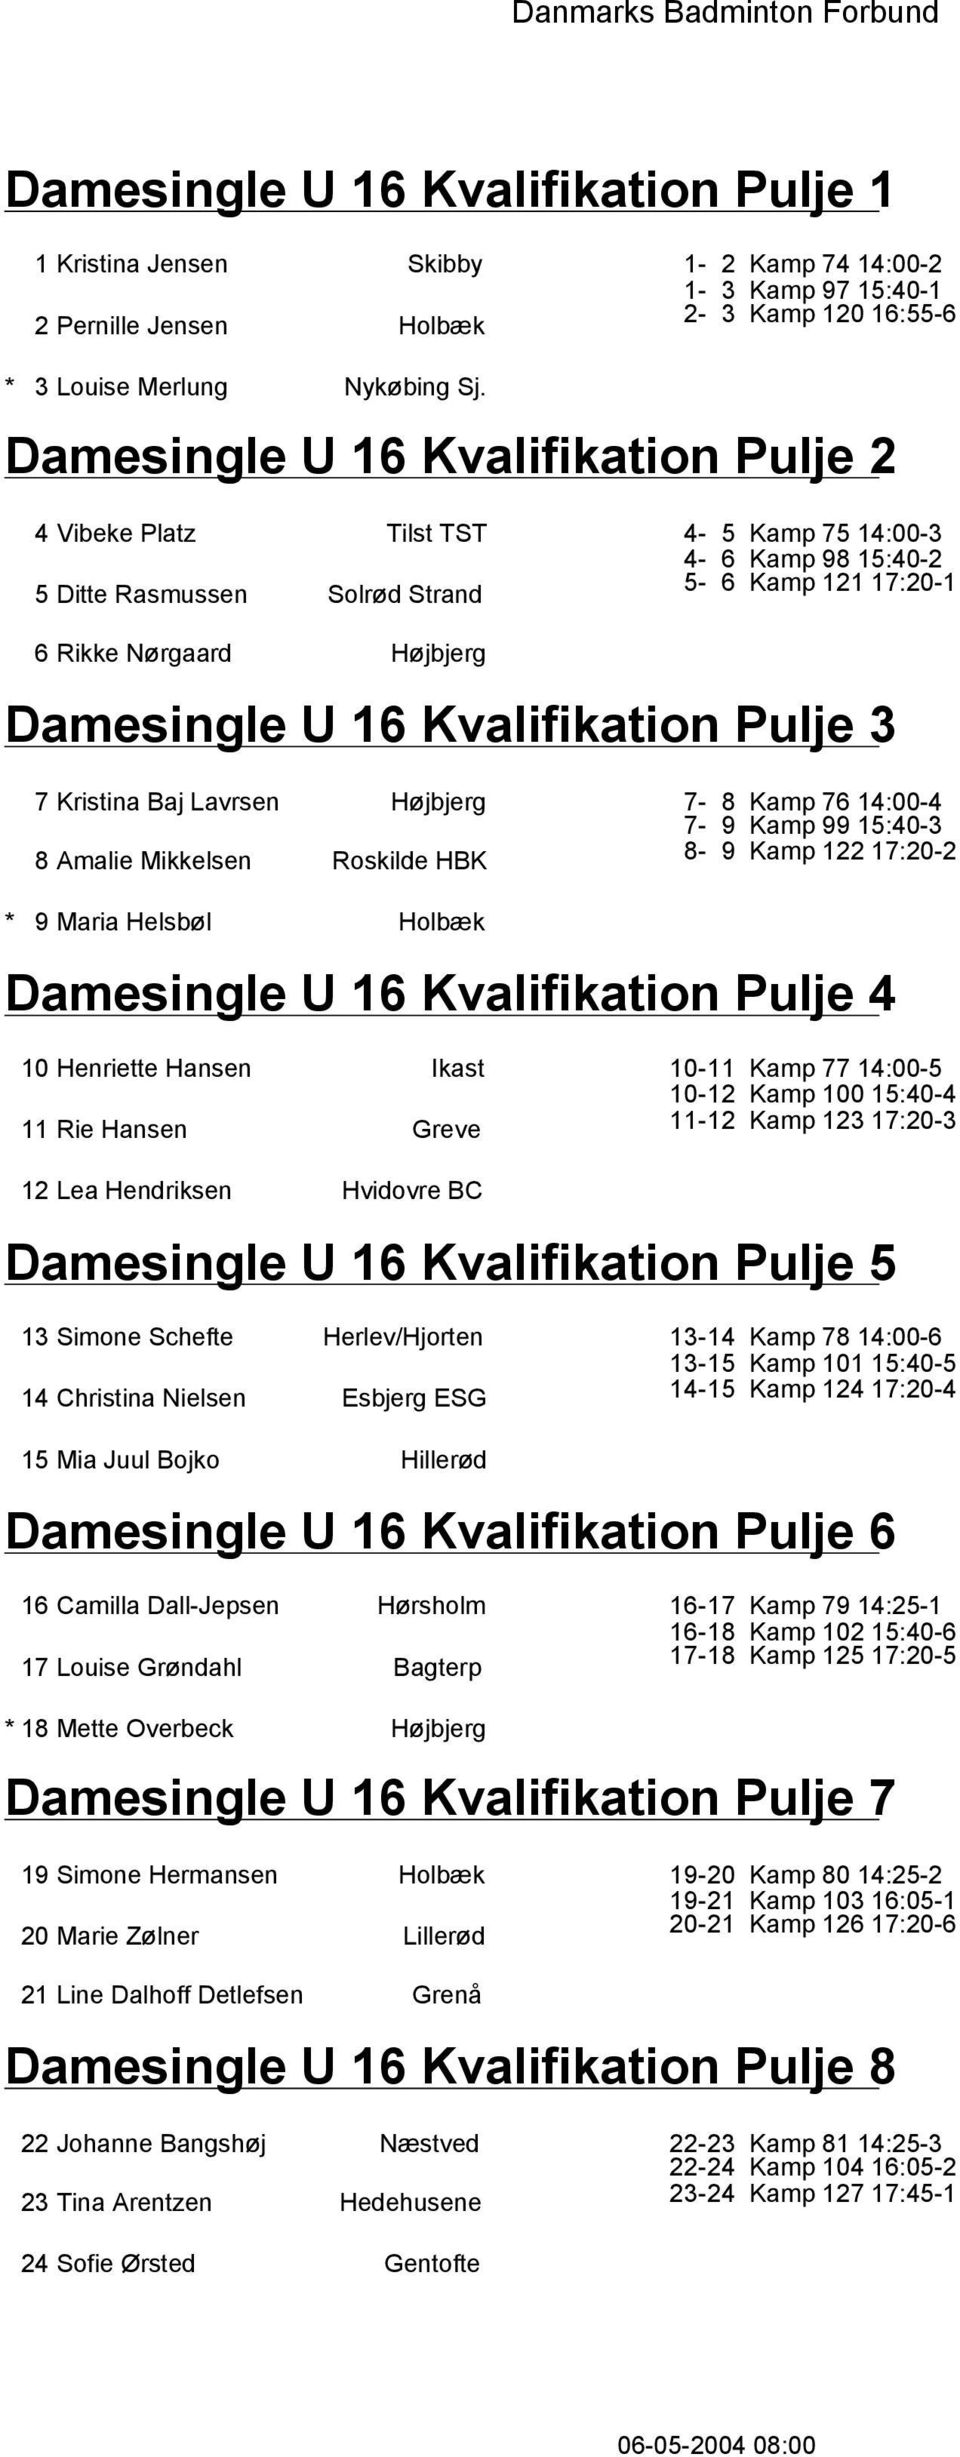 Kvalifikation Pulje 3 7 Kristina Baj Lavrsen Højbjerg 8 Amalie Mikkelsen Roskilde HBK 7-8 Kamp 76 14:00-4 7-9 Kamp 99 15:40-3 8-9 Kamp 122 17:20-2 * 9 Maria Helsbøl Holbæk Damesingle U 16